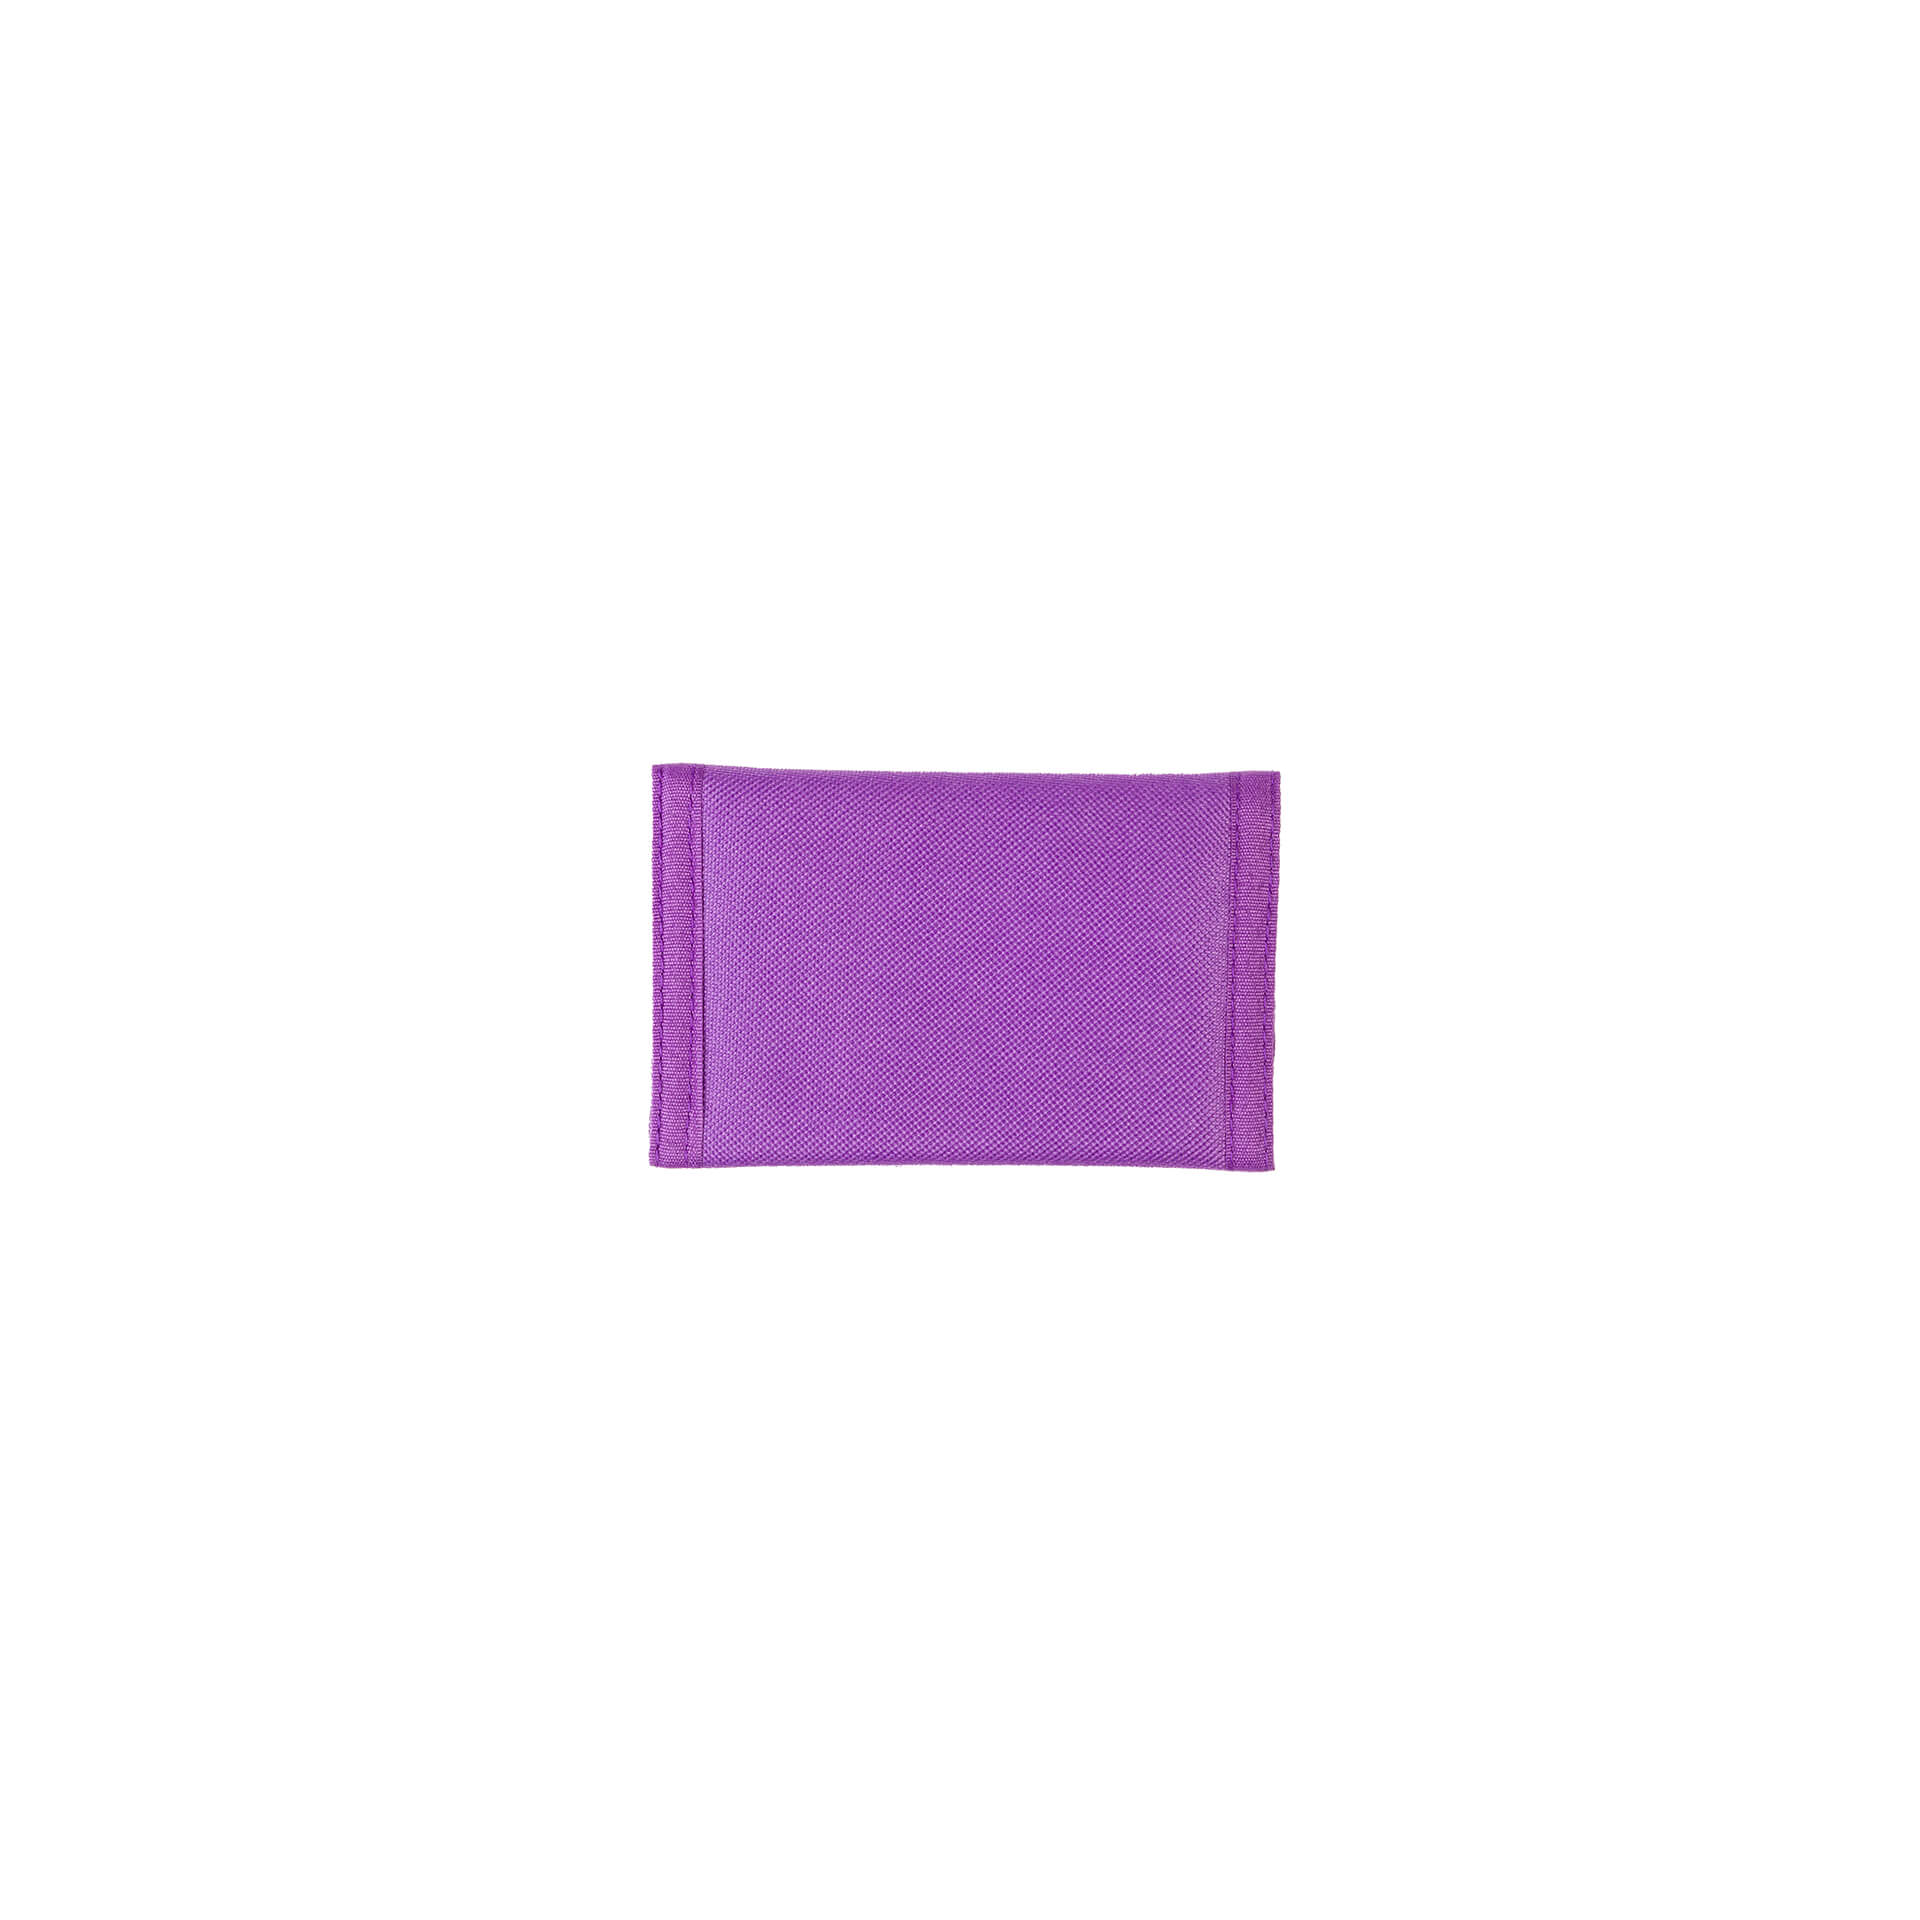 RSCA purple wallet